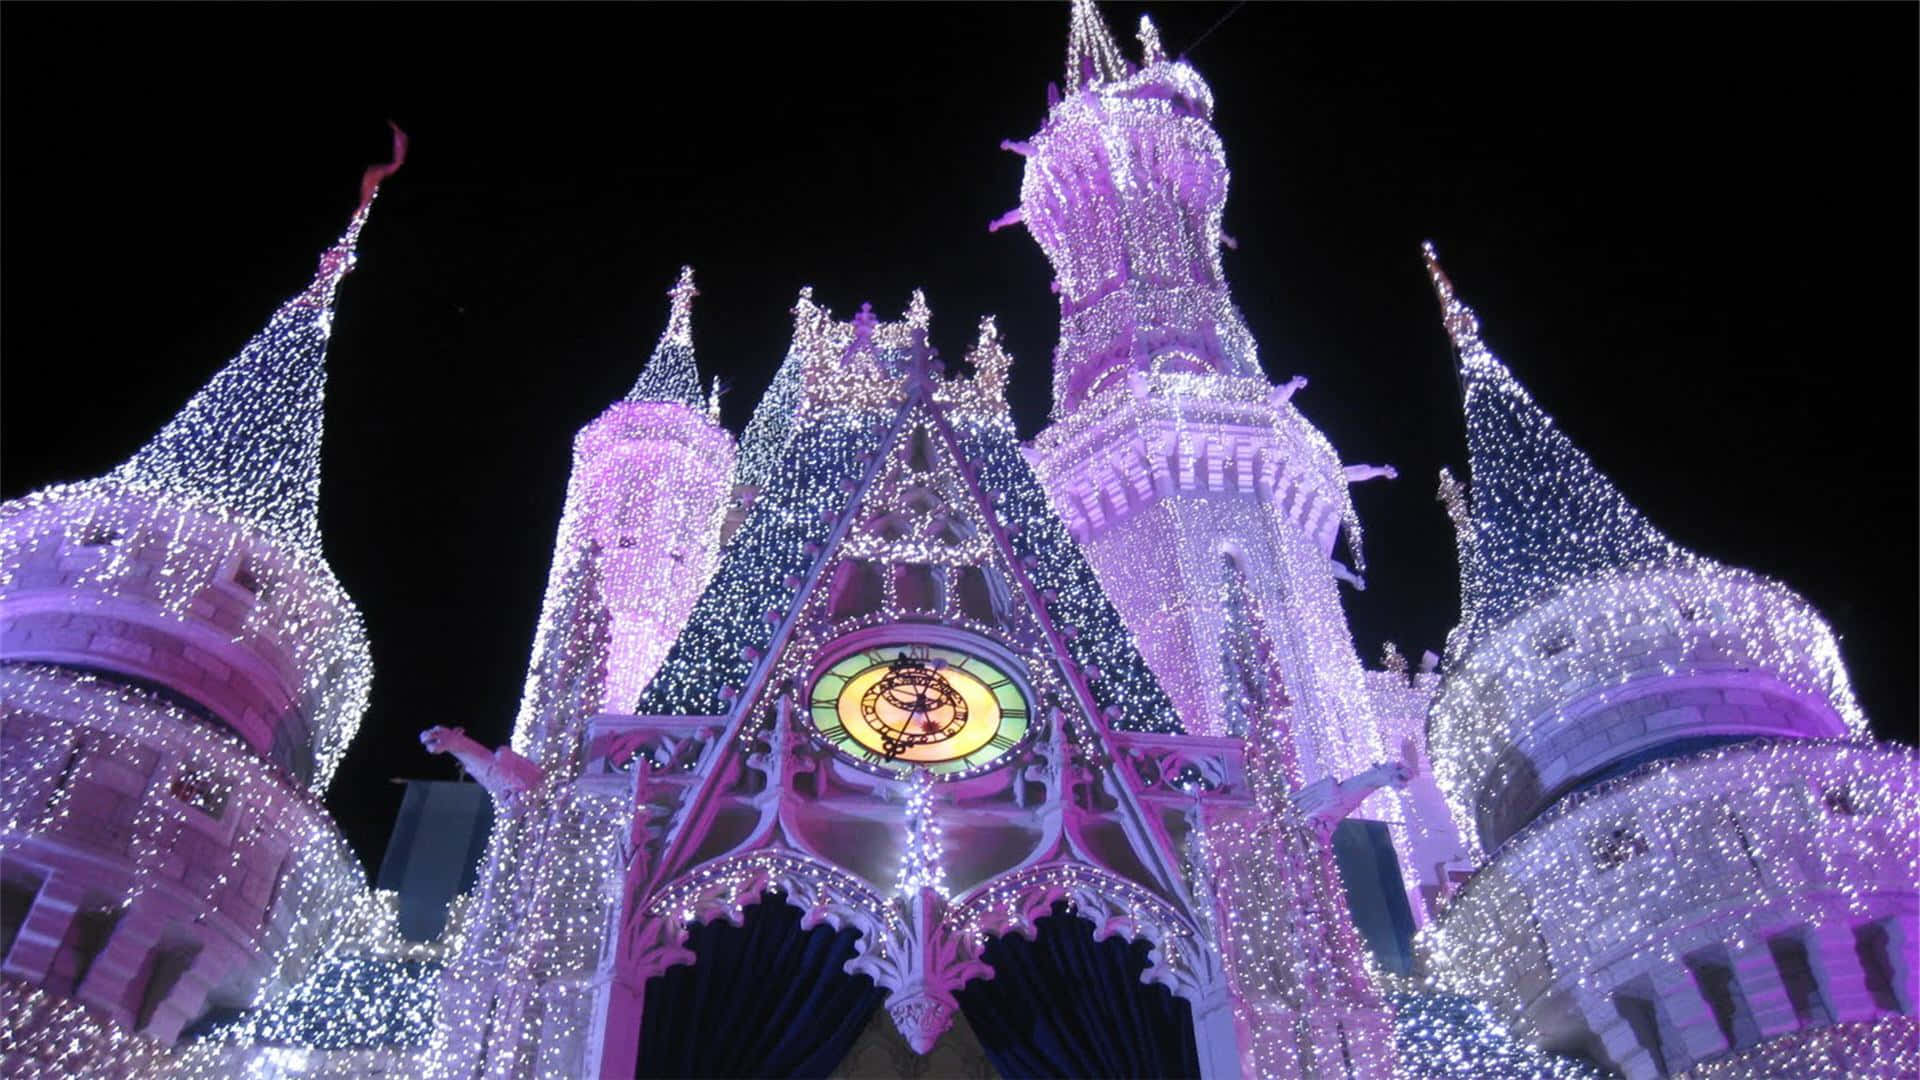 Let your magical dreams come true at the Disney Castle